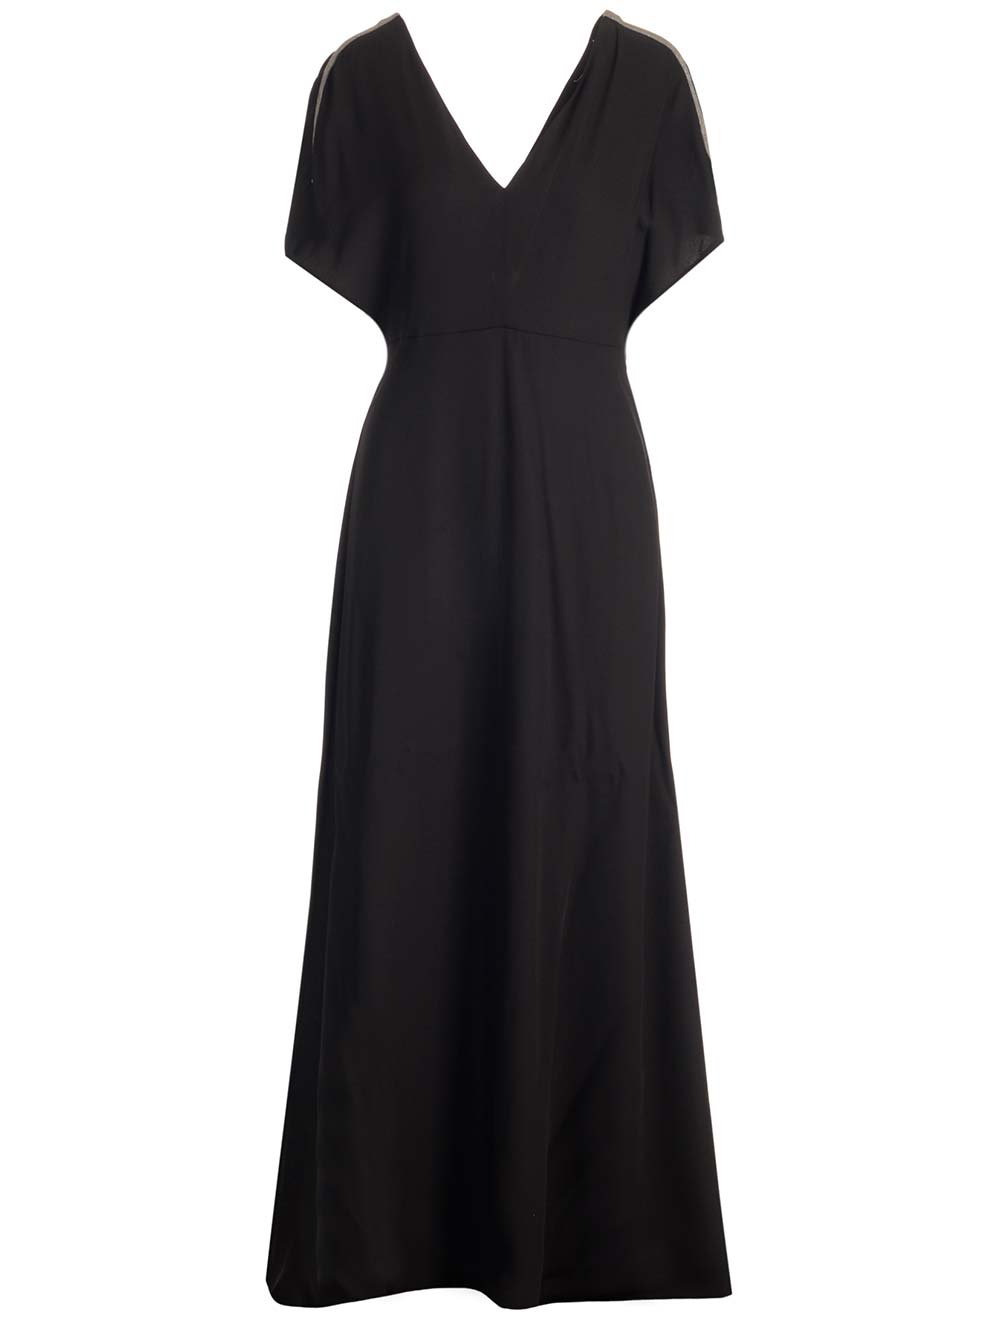 FABIANA FILIPPI BLACK LONG DRESS